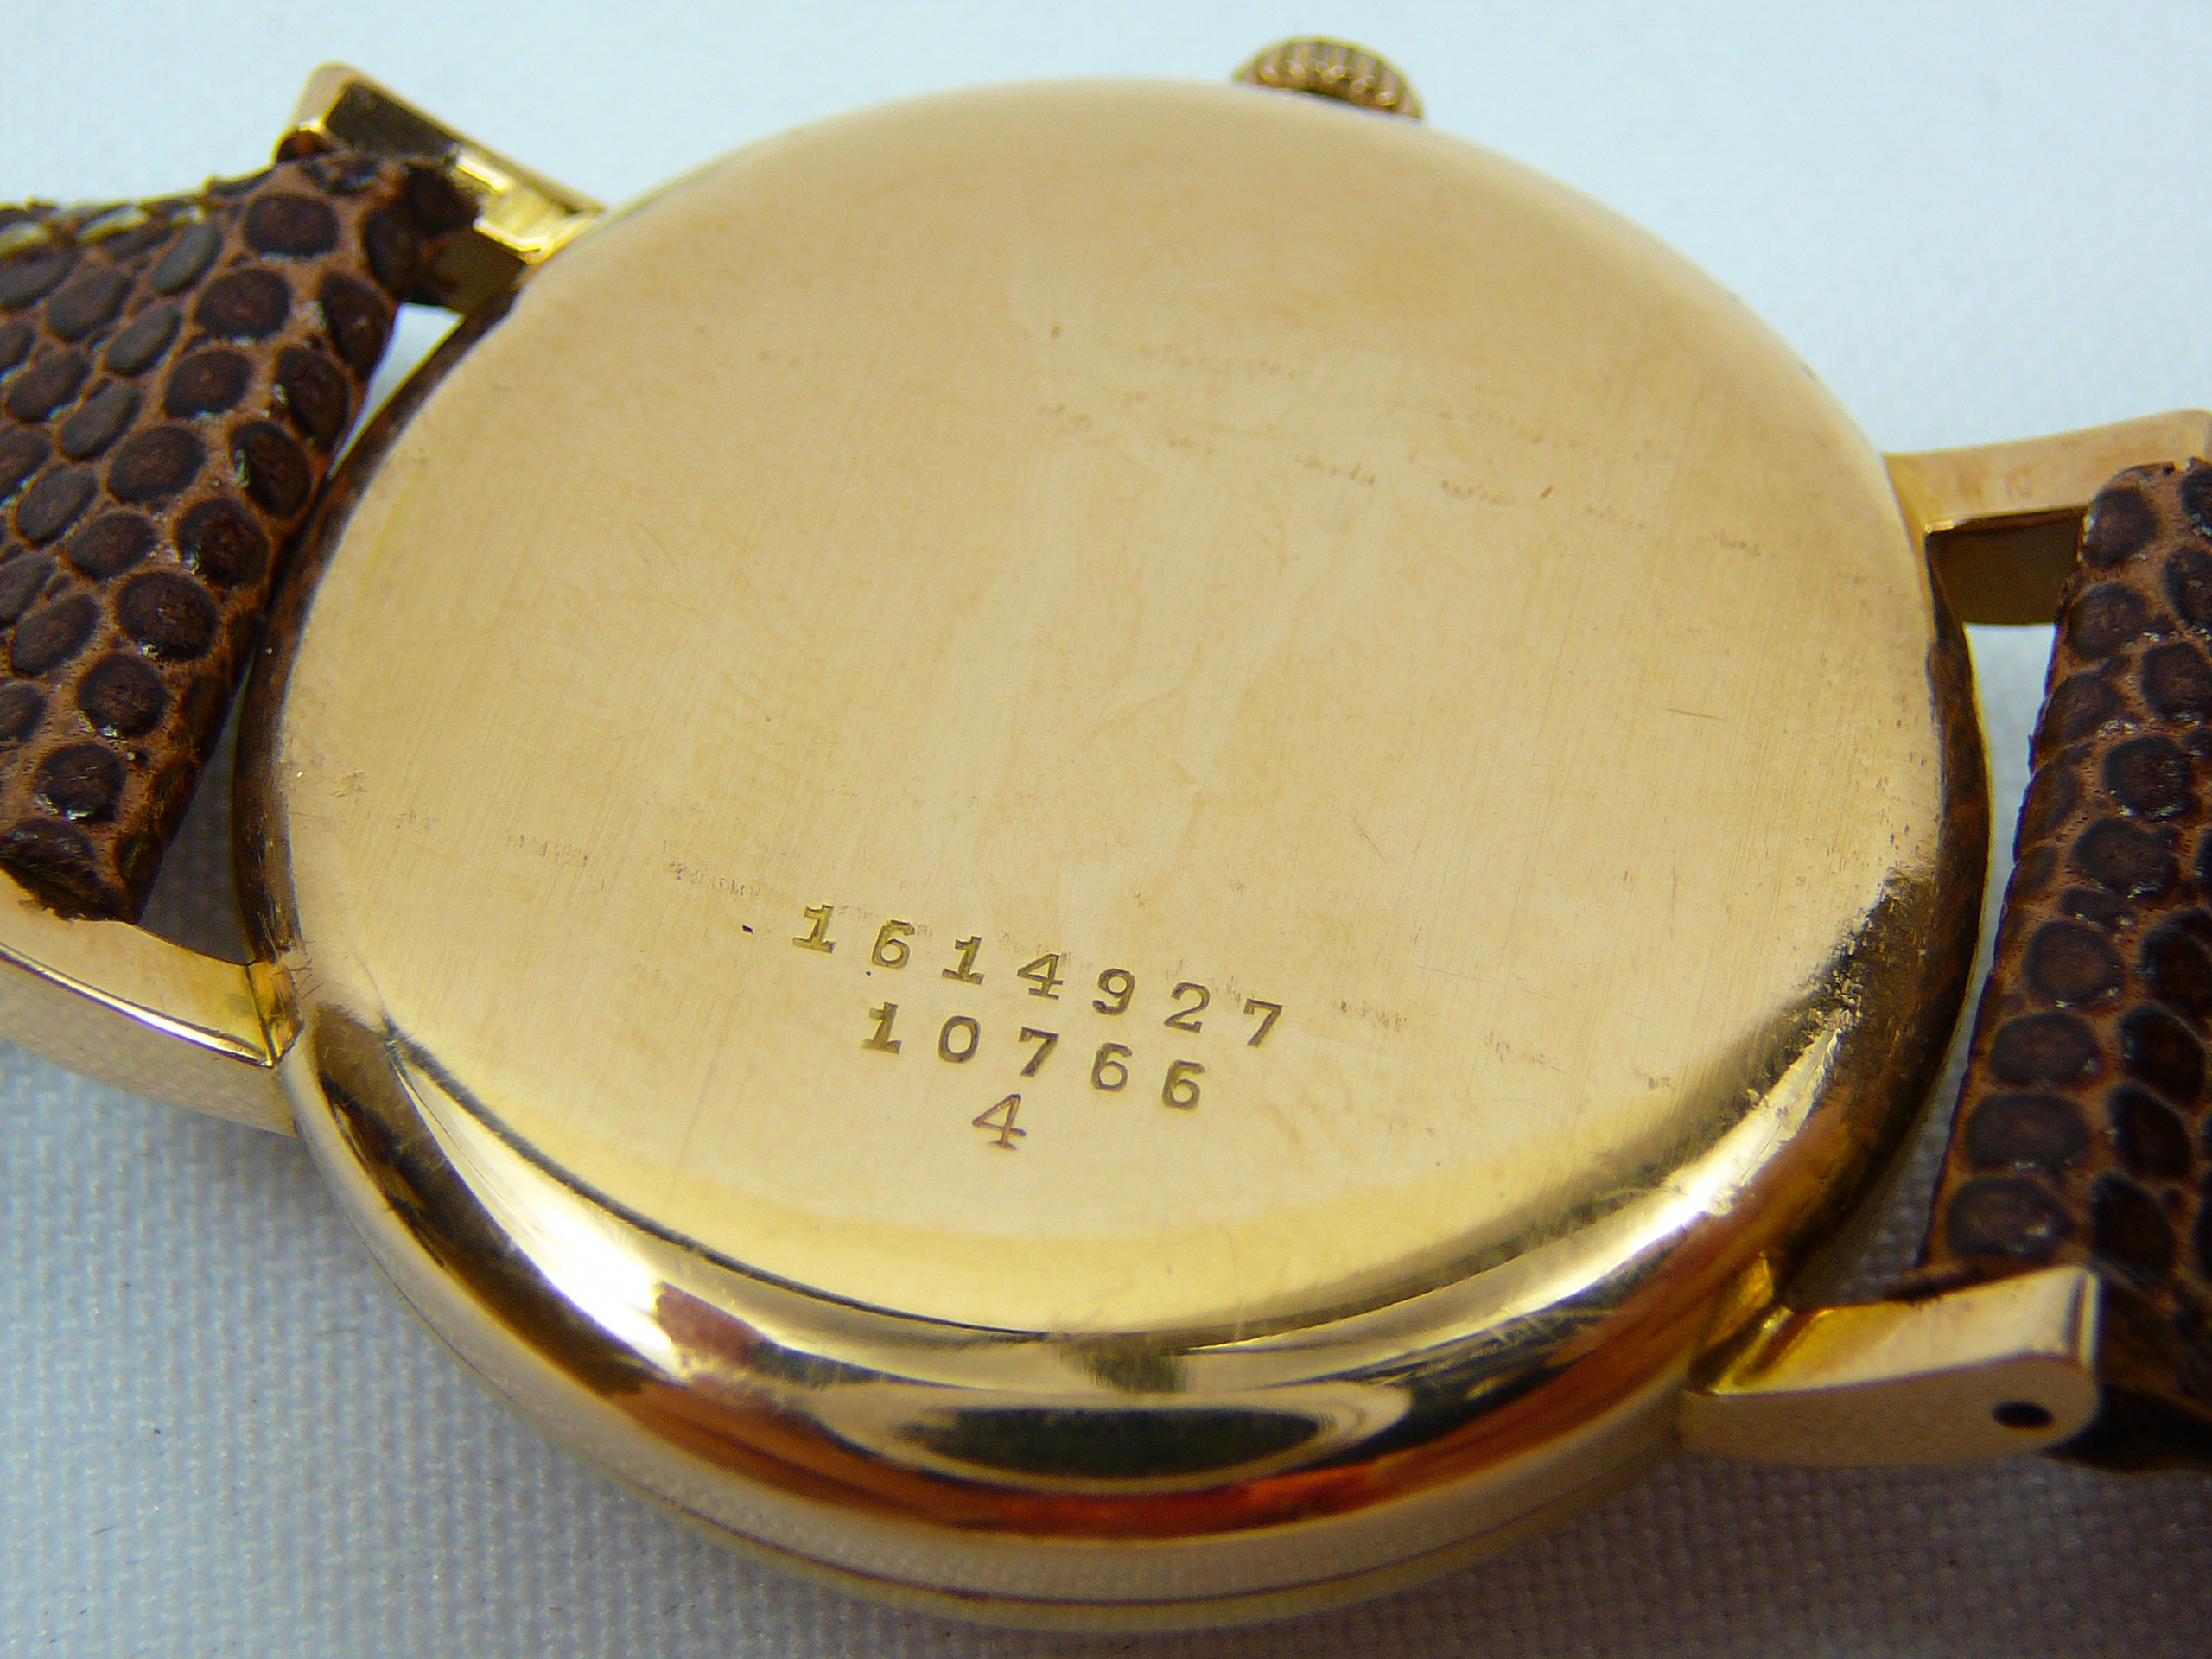 Gents Vintage Gold Universal Wrist Watch - Image 5 of 9